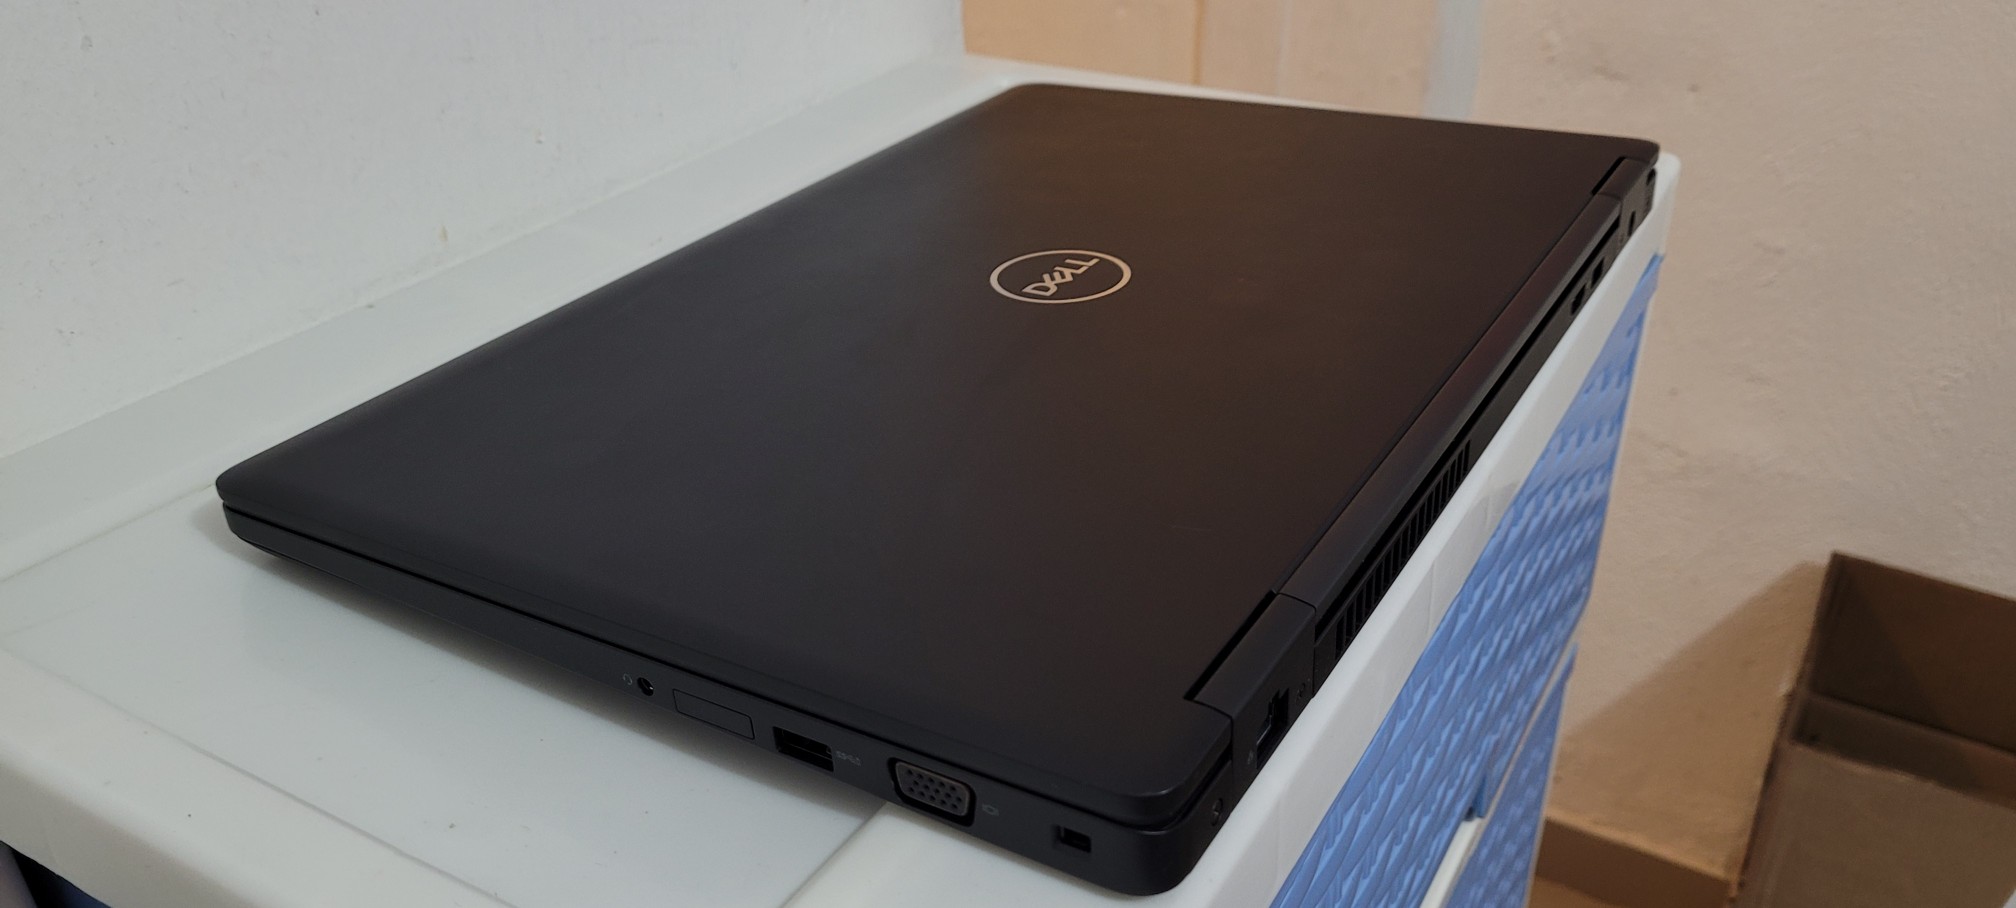 computadoras y laptops - Dell 5590 17 Pulg Core i5 8va Gen Ram 16gb ddr4 Disco 1tb SSD Video 8gb 2